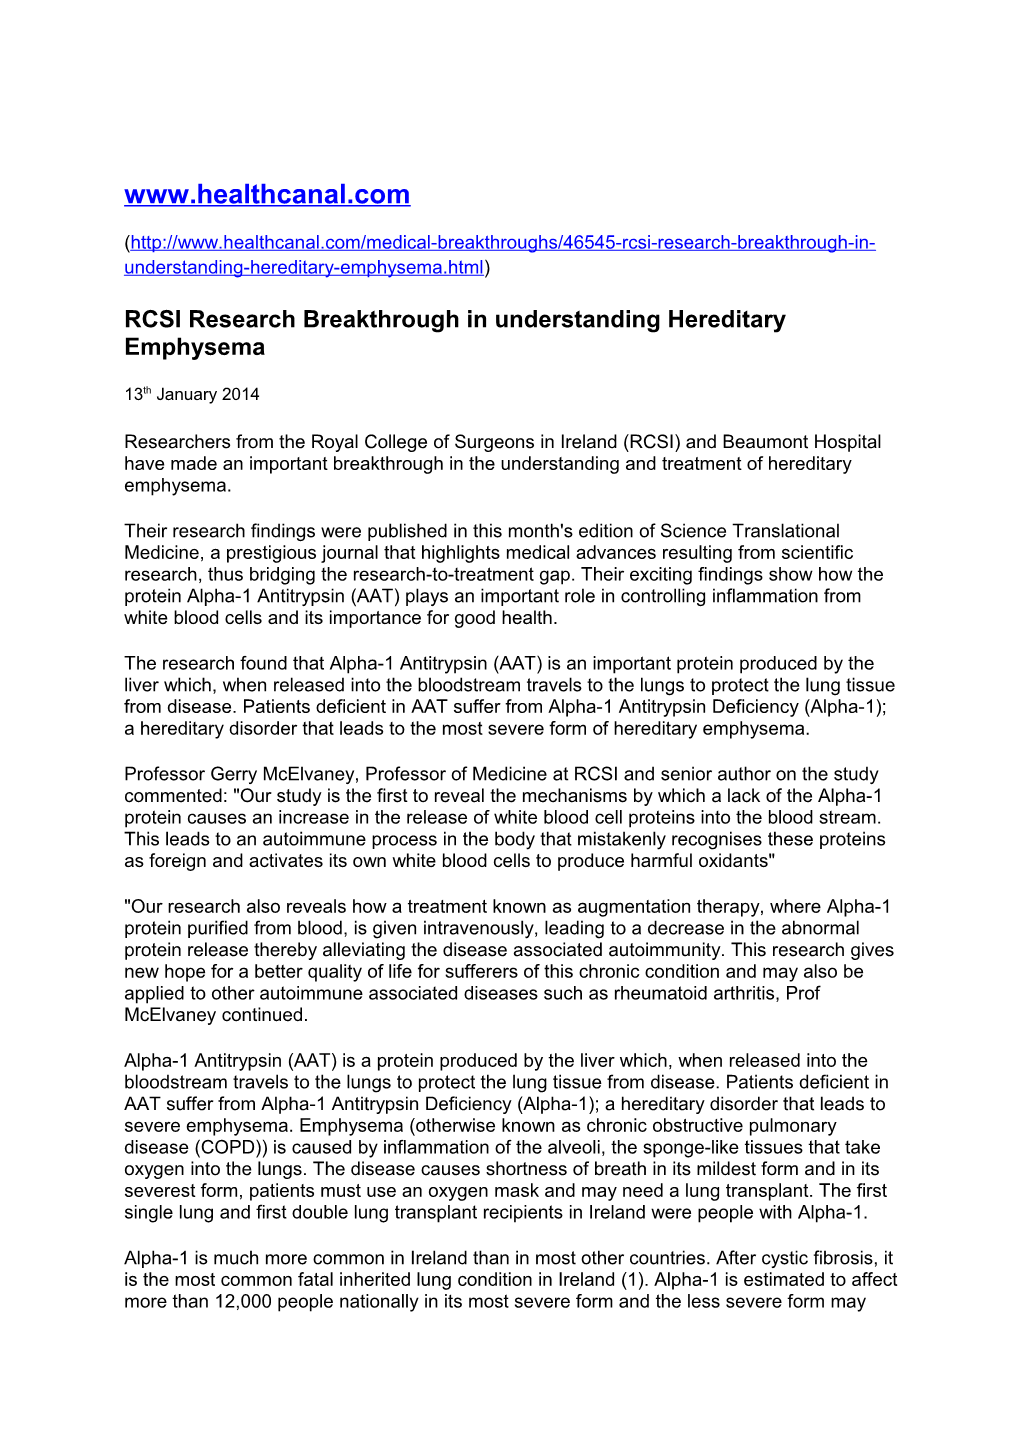 RCSI Research Breakthrough in Understanding Hereditary Emphysema